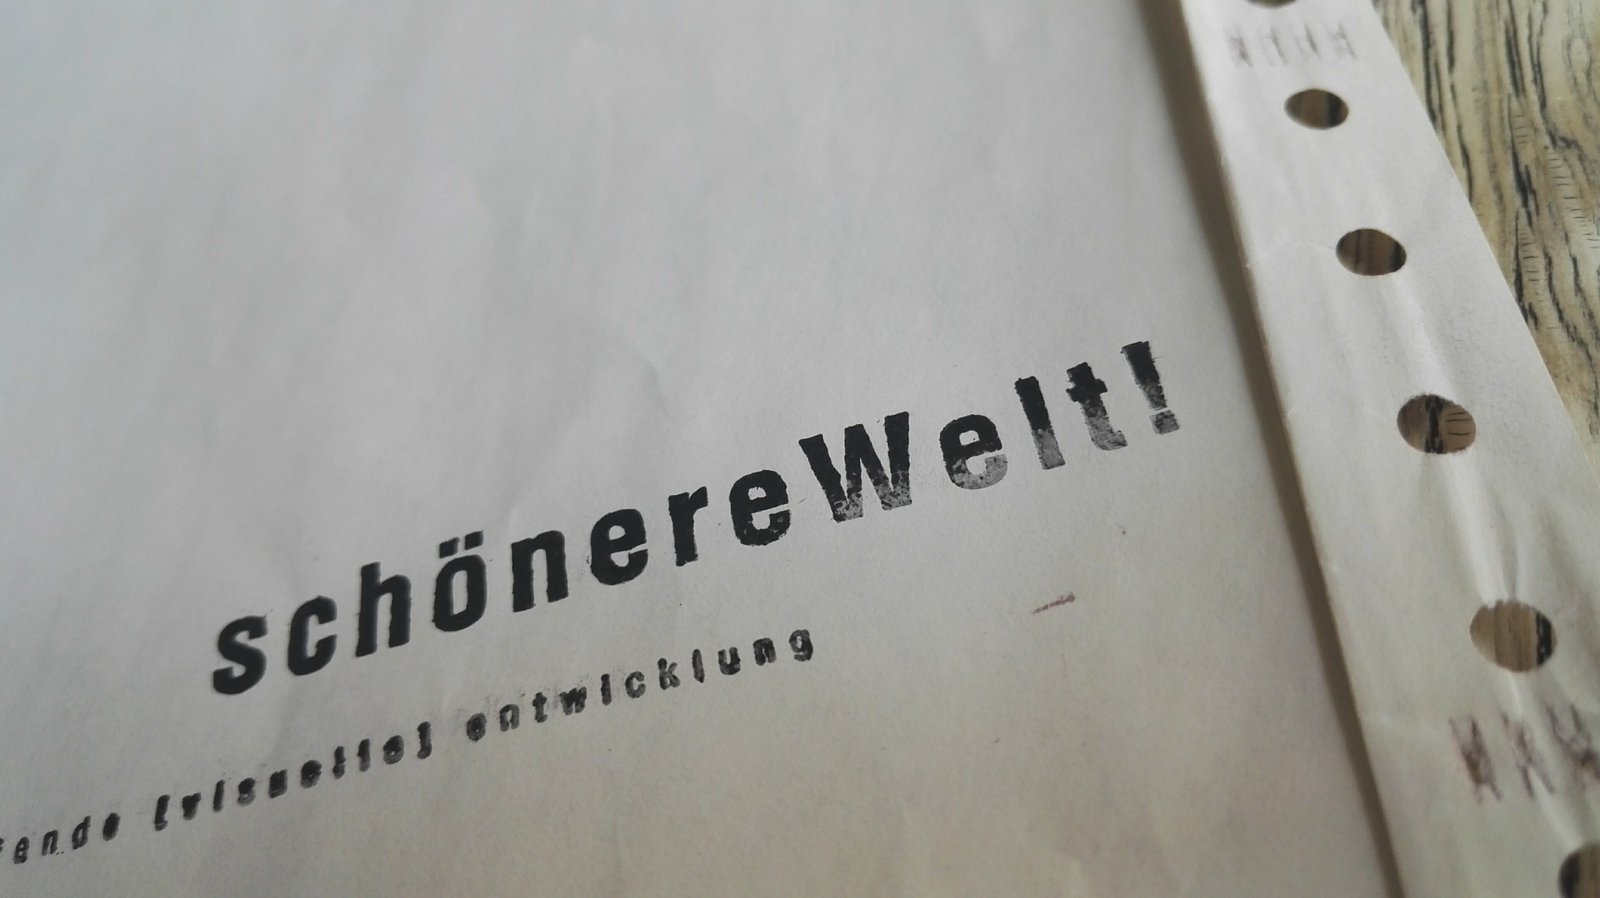 schönereWelt! corporate-stationary-design-letterhead-BRIEFPAPIER-2001-MatrixPrint-on-EndlessPaper